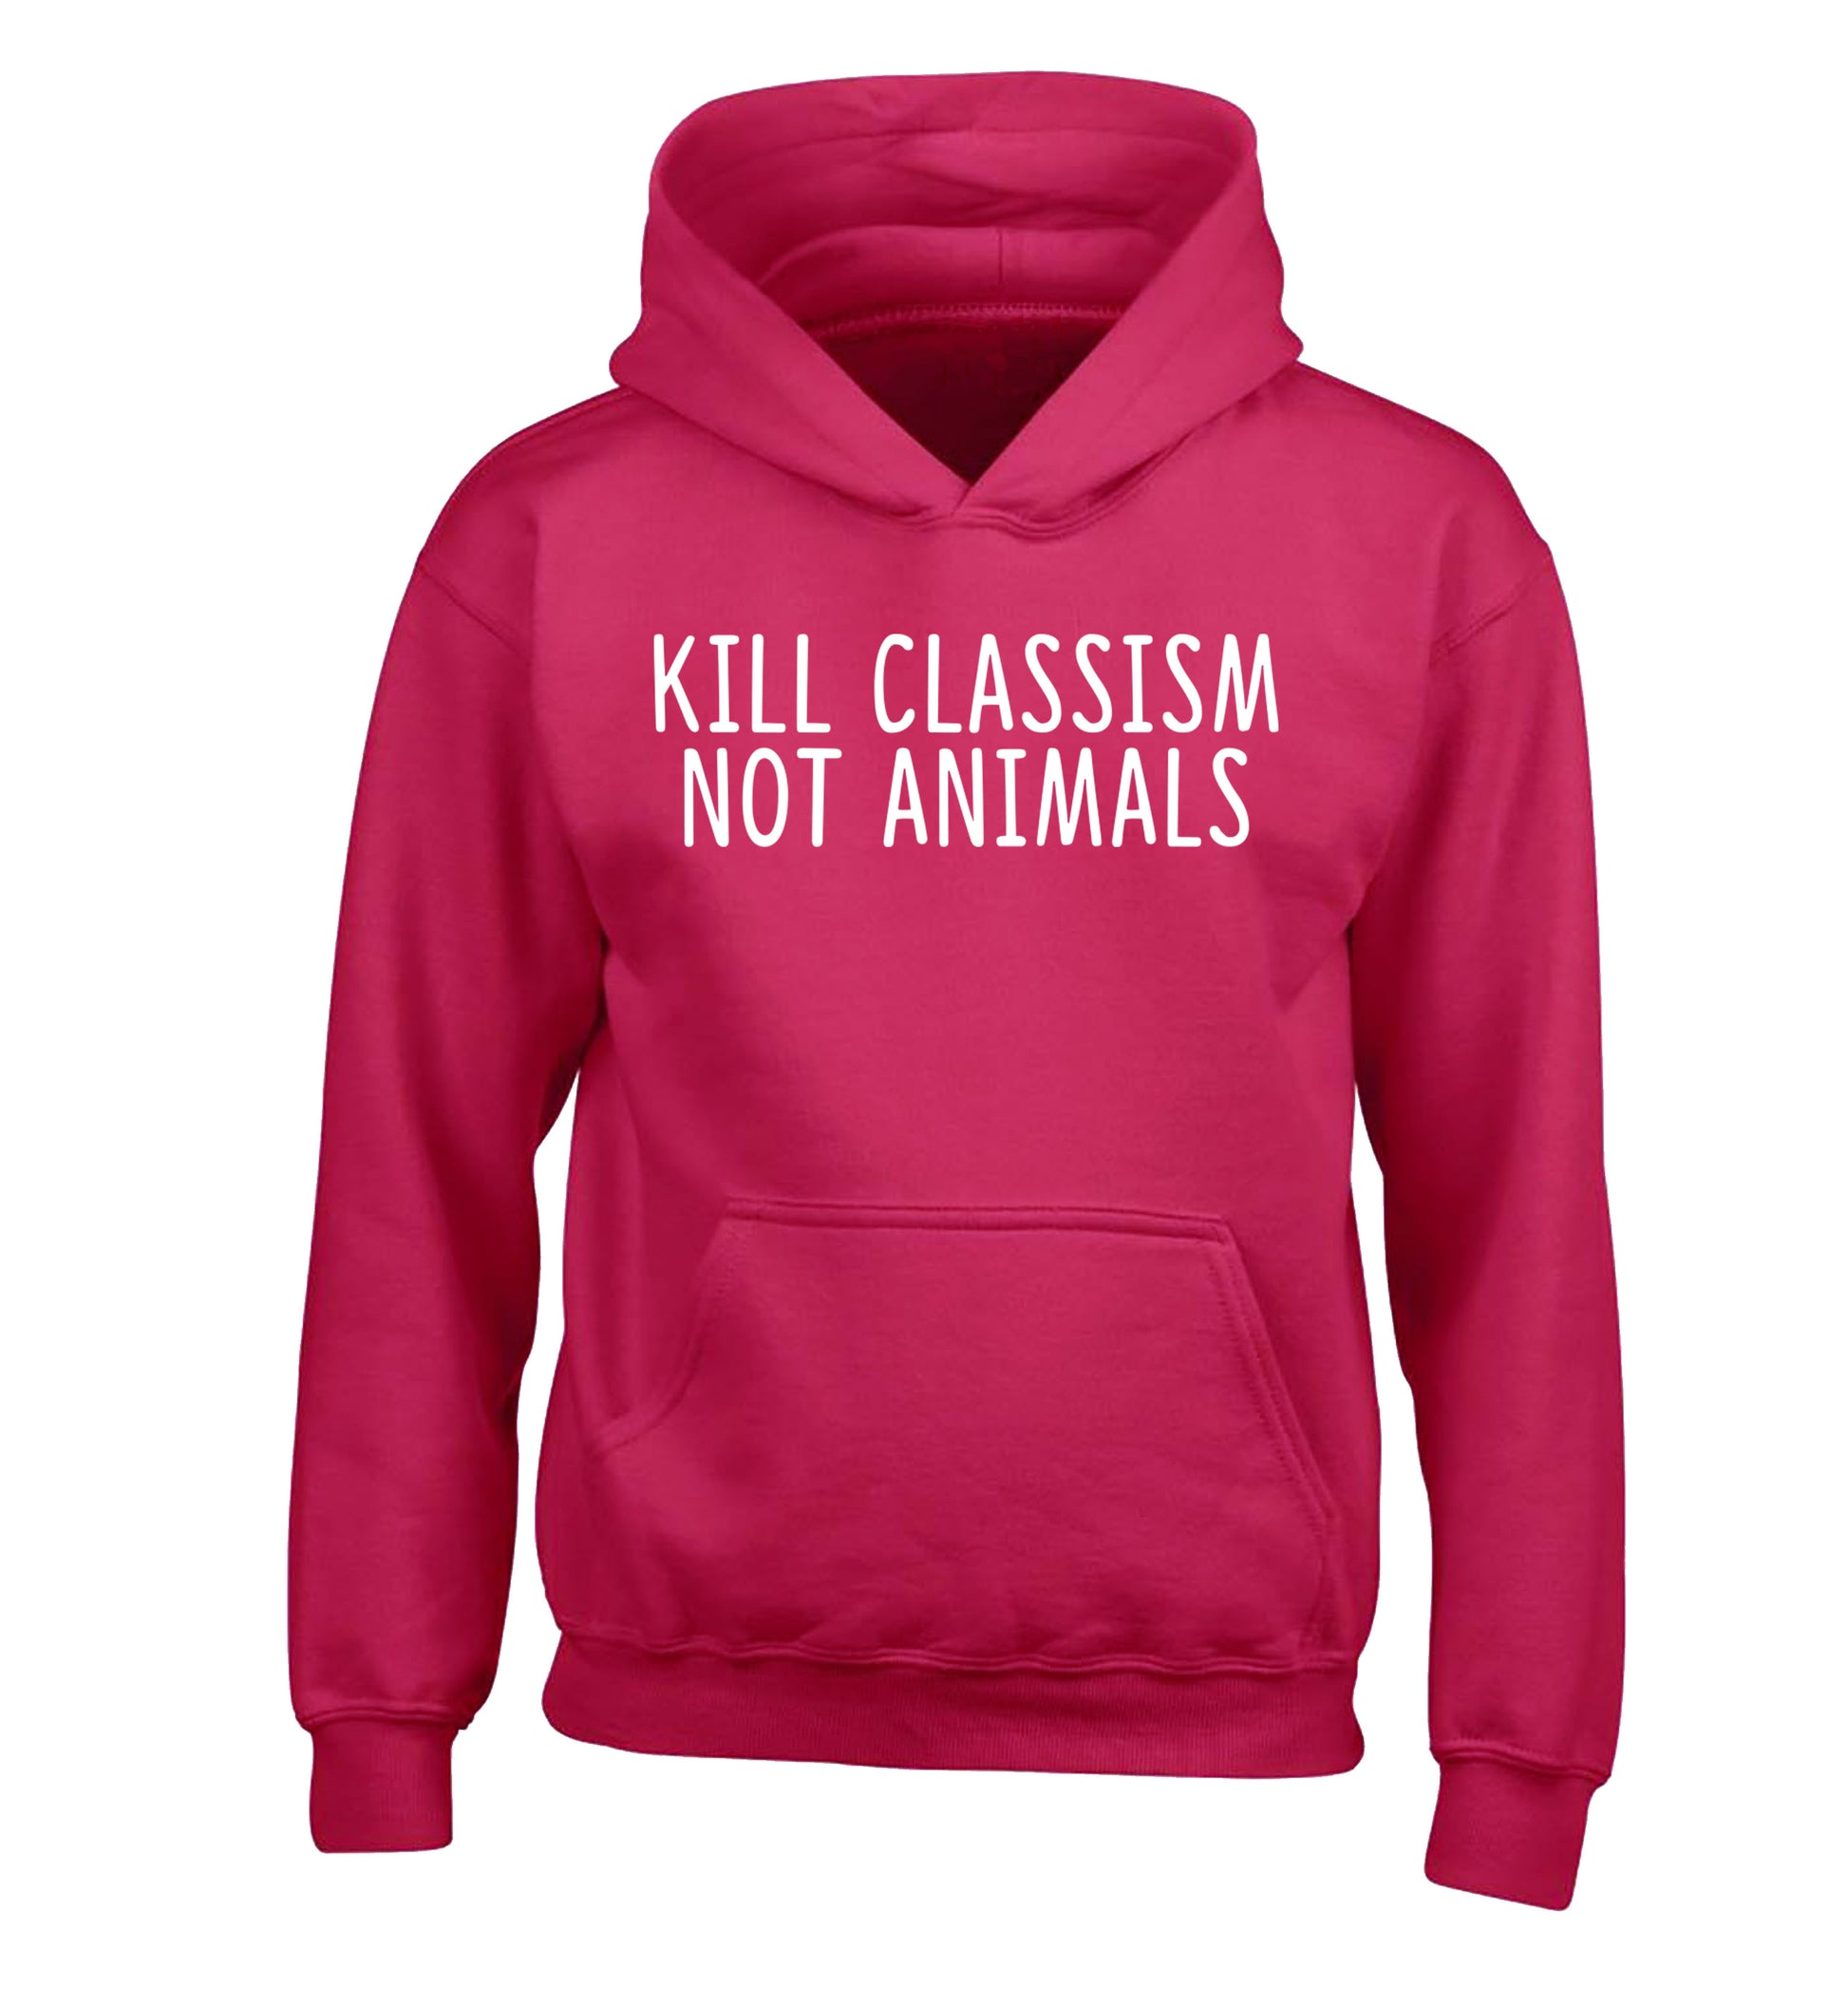 Kill Classism Not Animals children's pink hoodie 12-13 Years